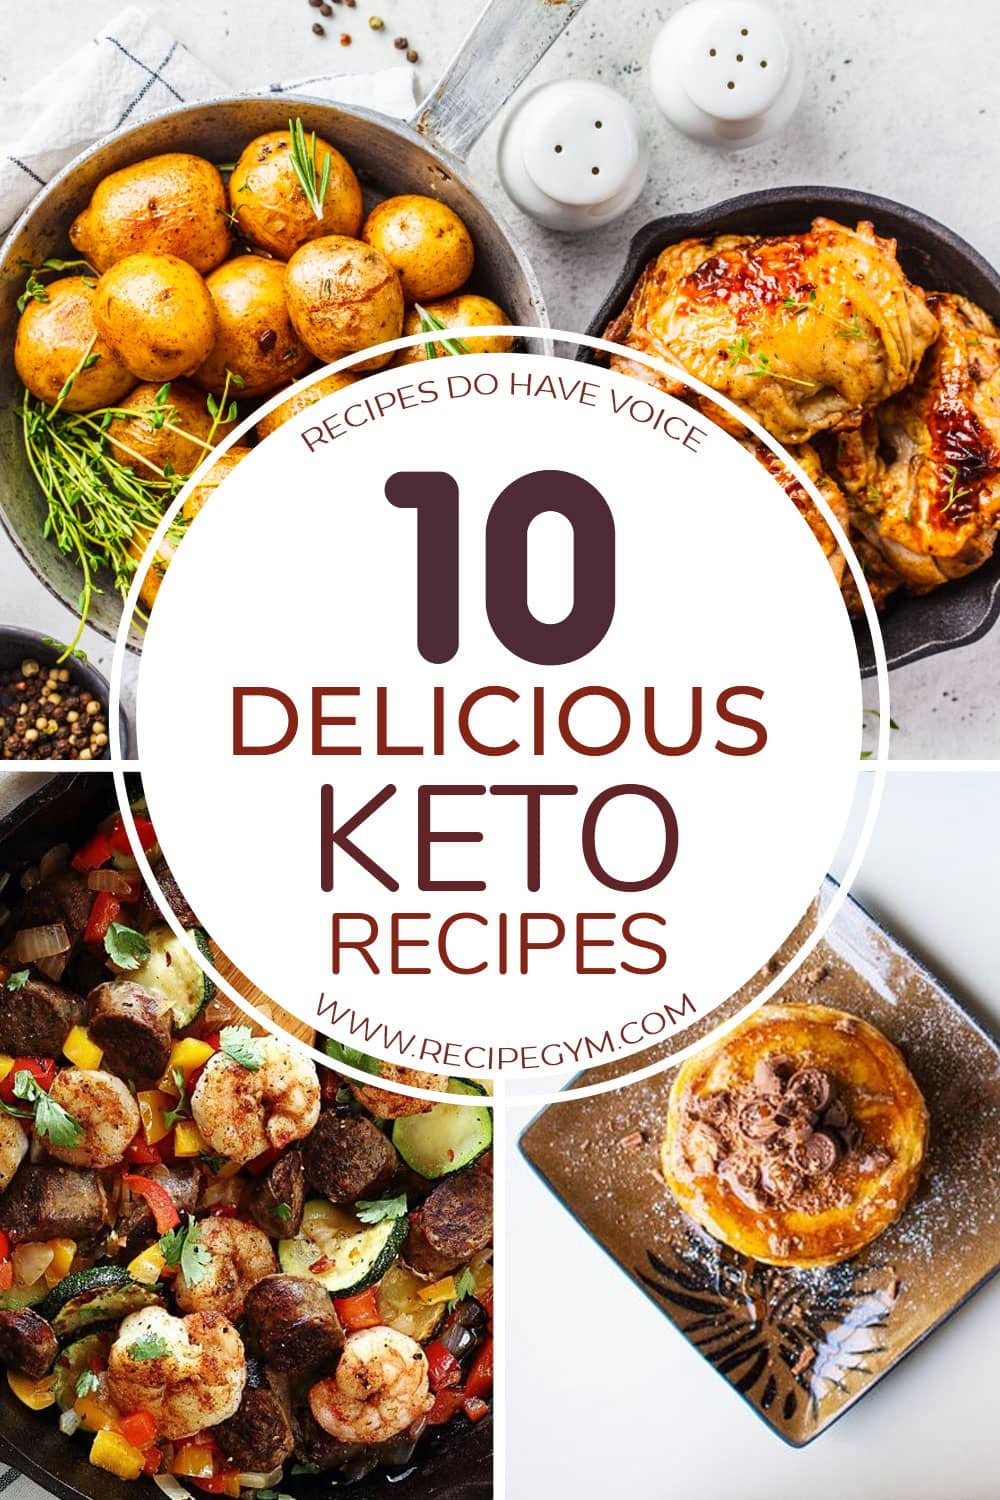 10 Delicious Keto Recipes | Your Daily Recipes